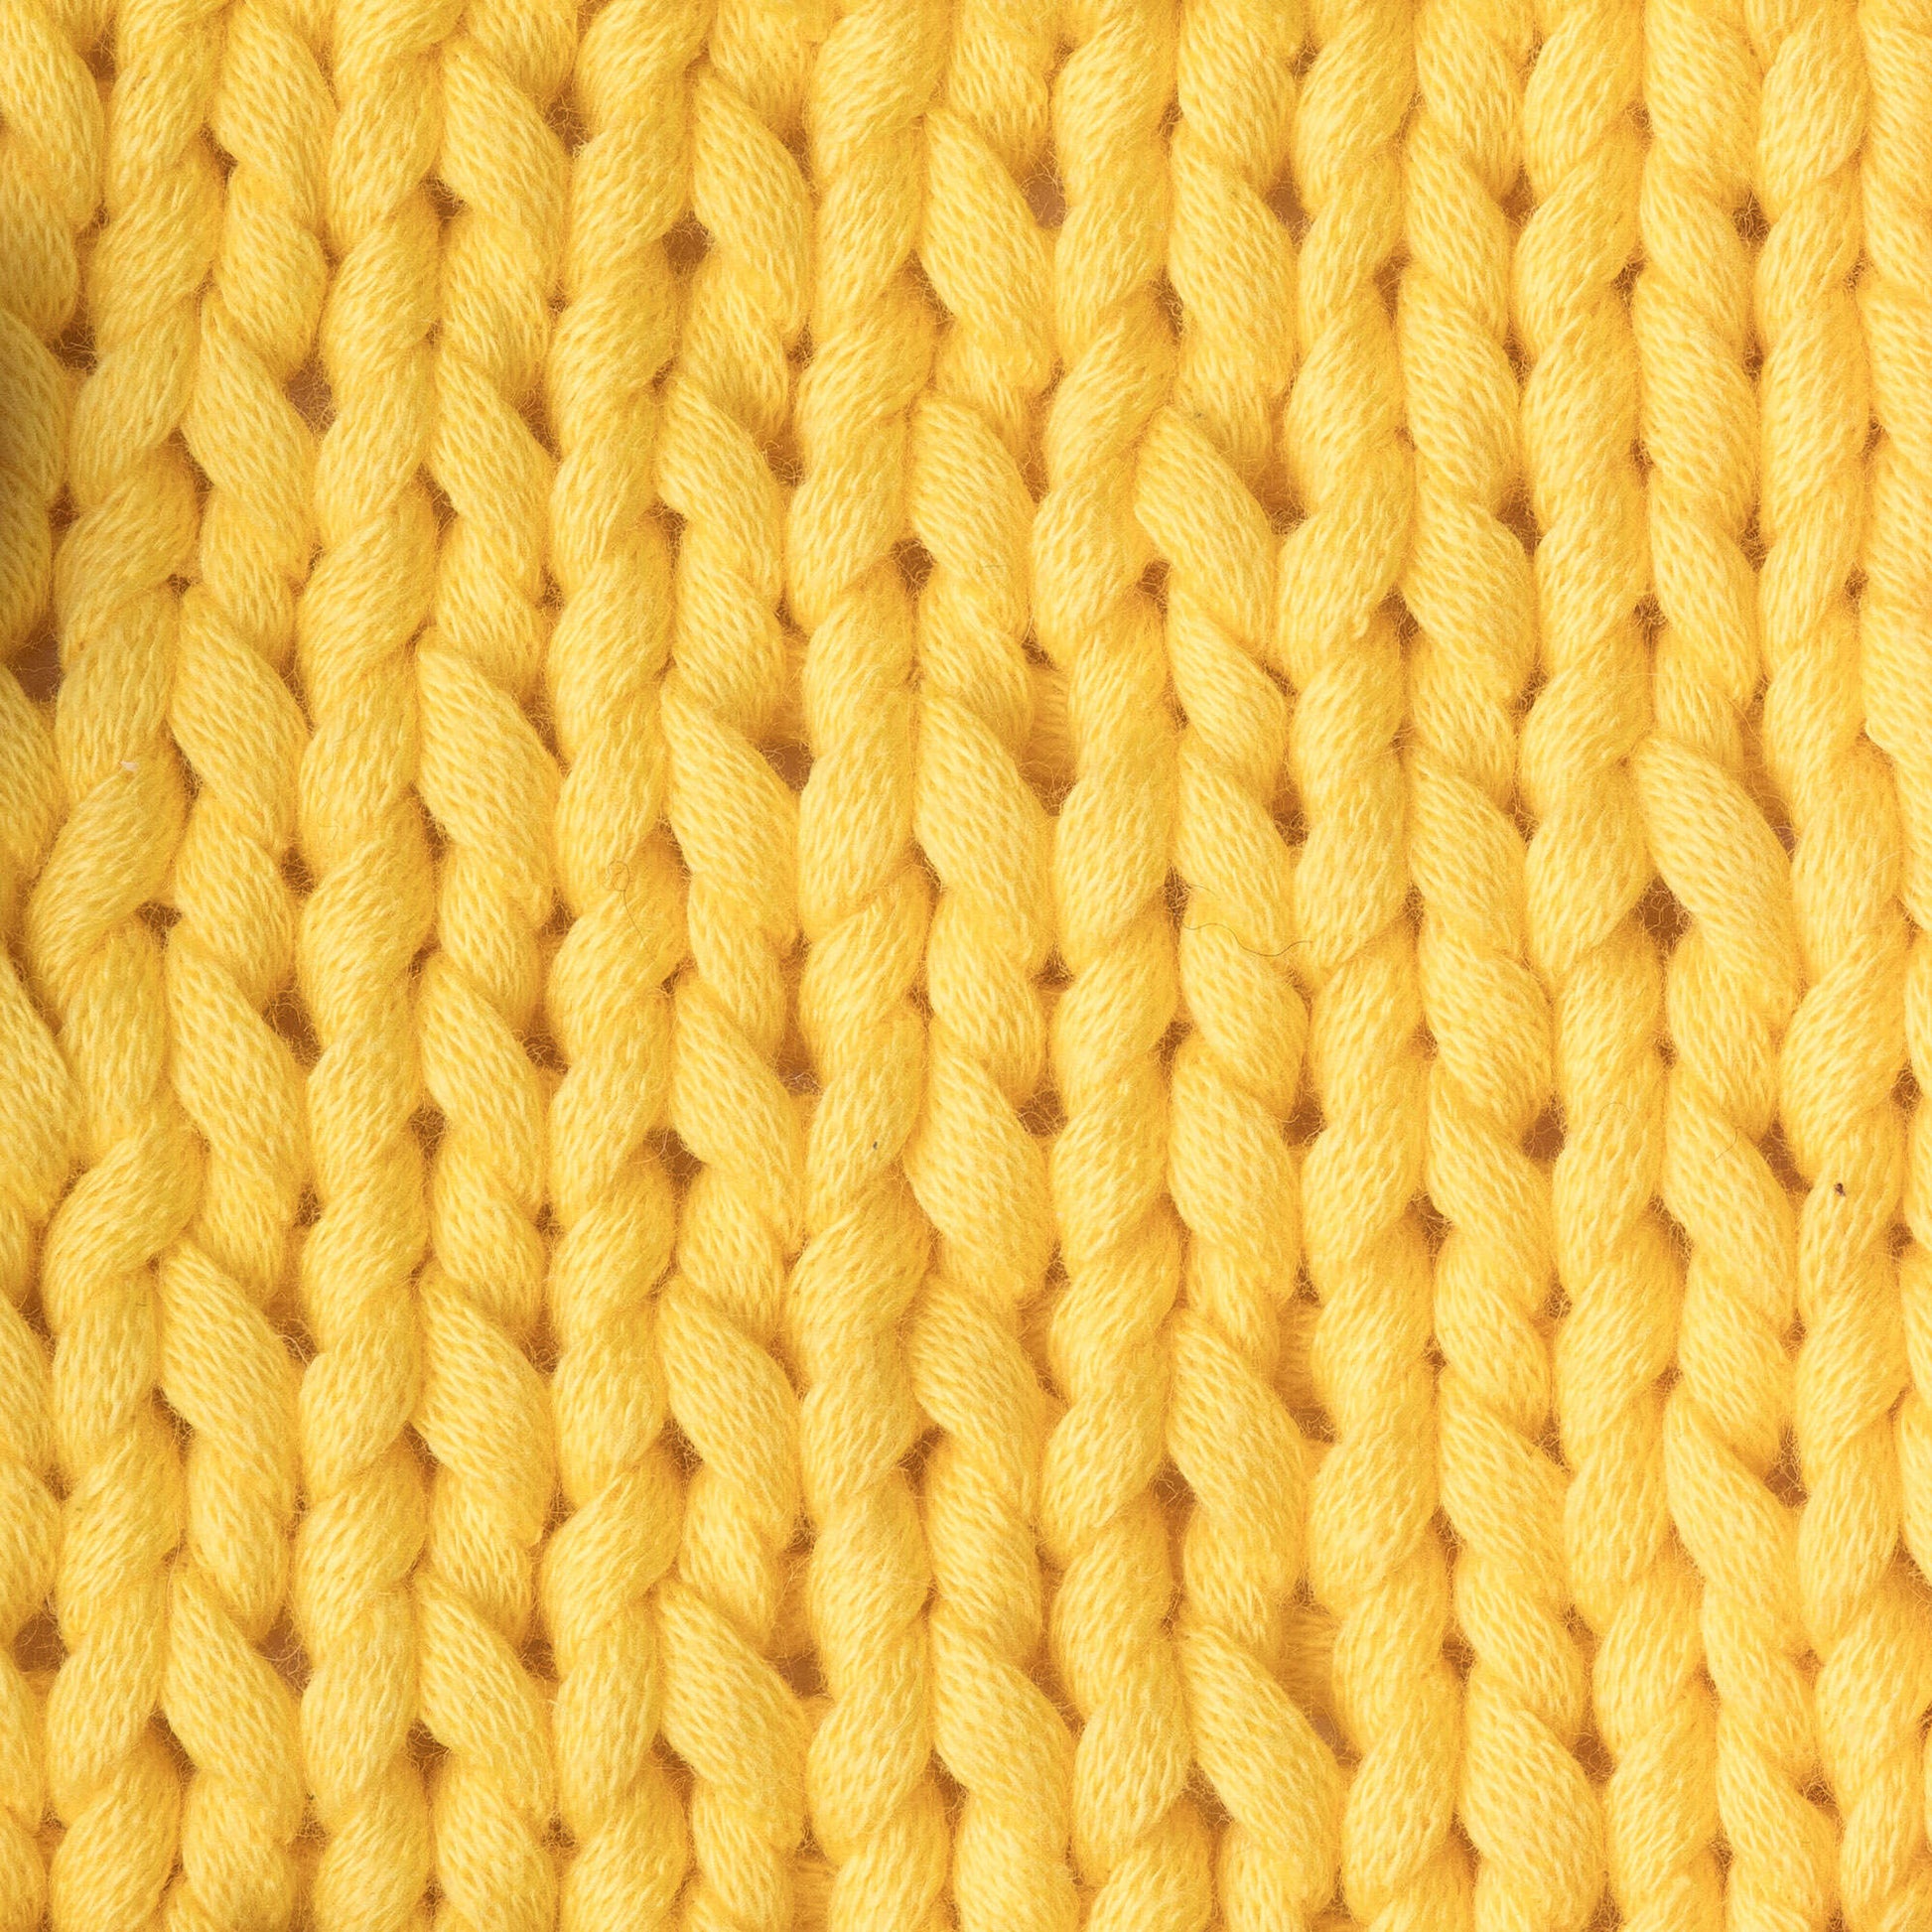 Bernat Maker Fashion Yarn - Discontinued